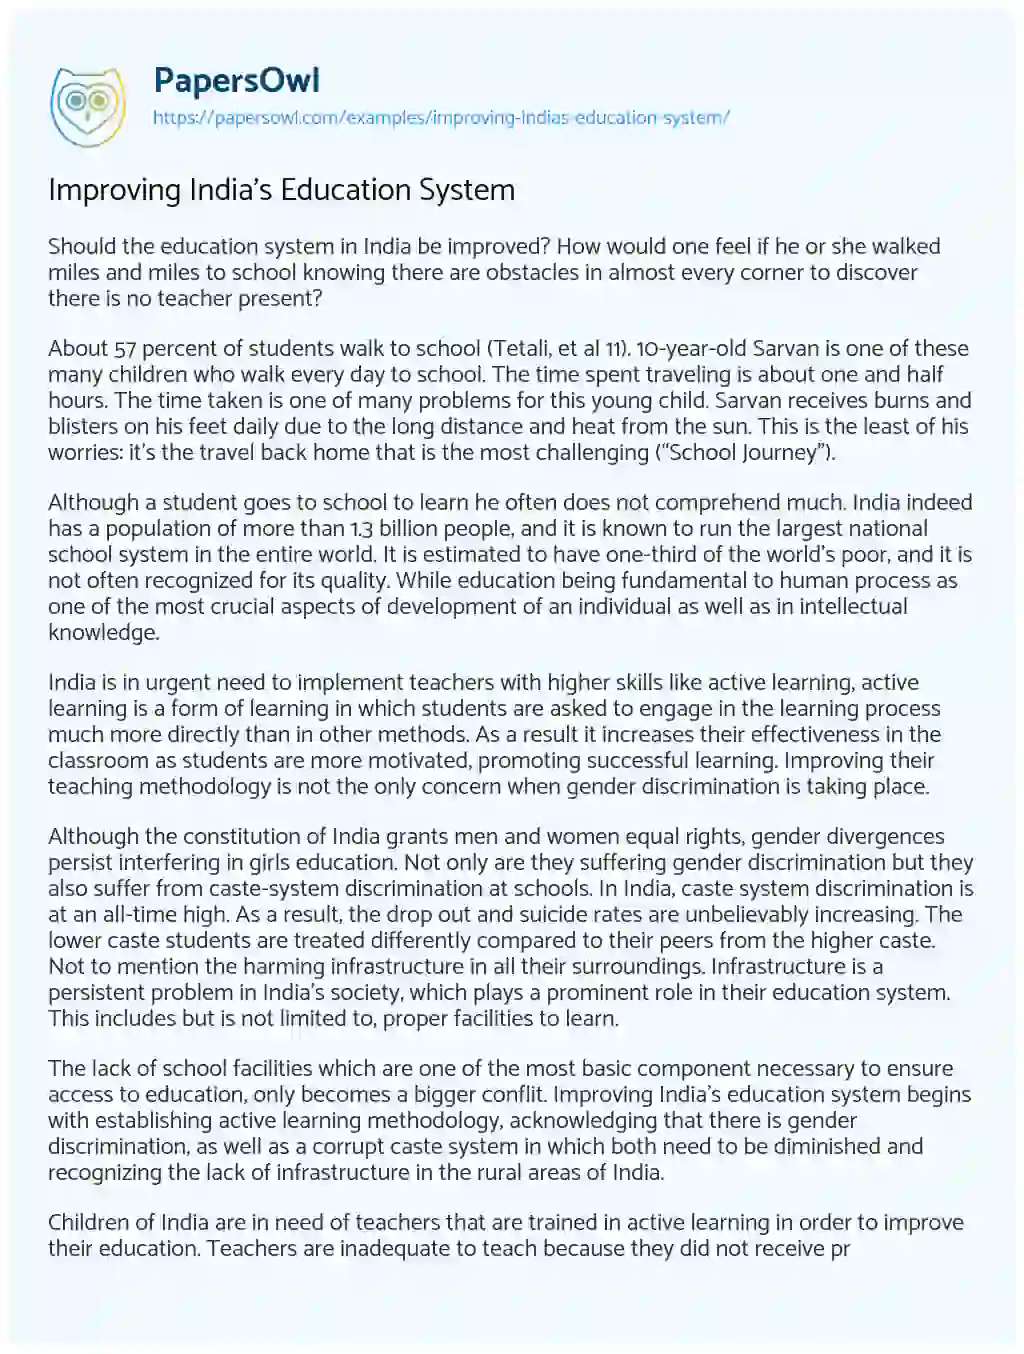 Improving India’s Education System essay